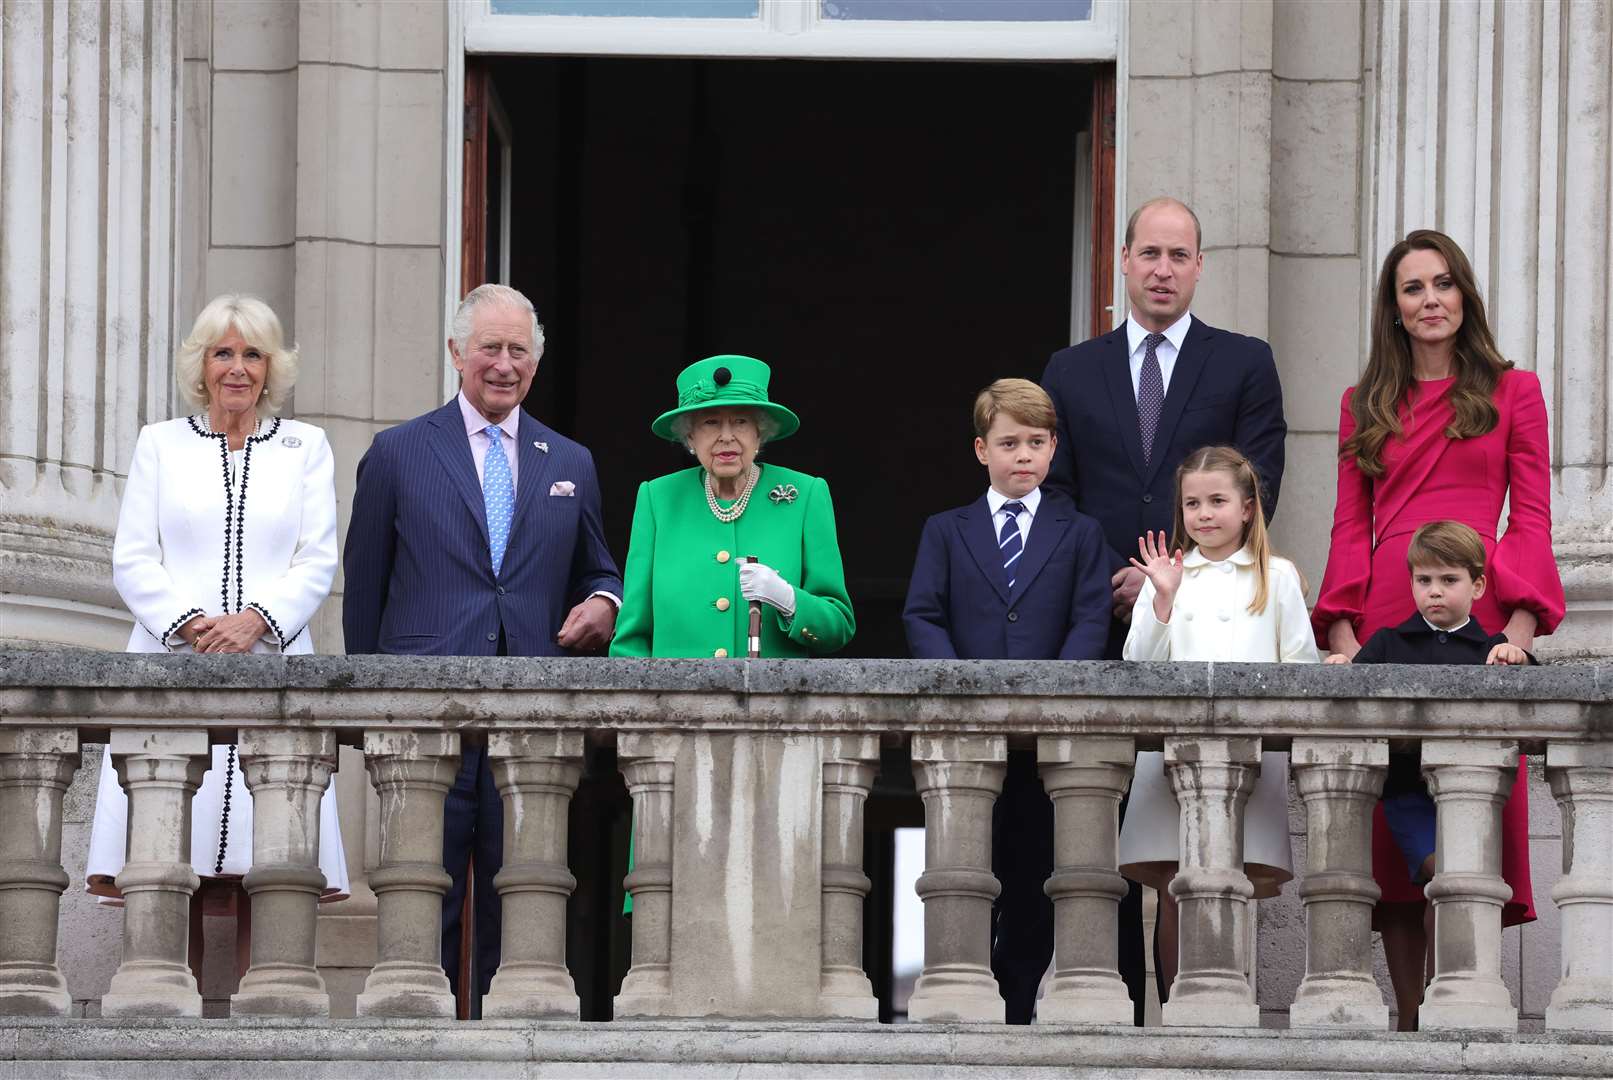 The royal family on the balcony (Chris Jackson/PA)